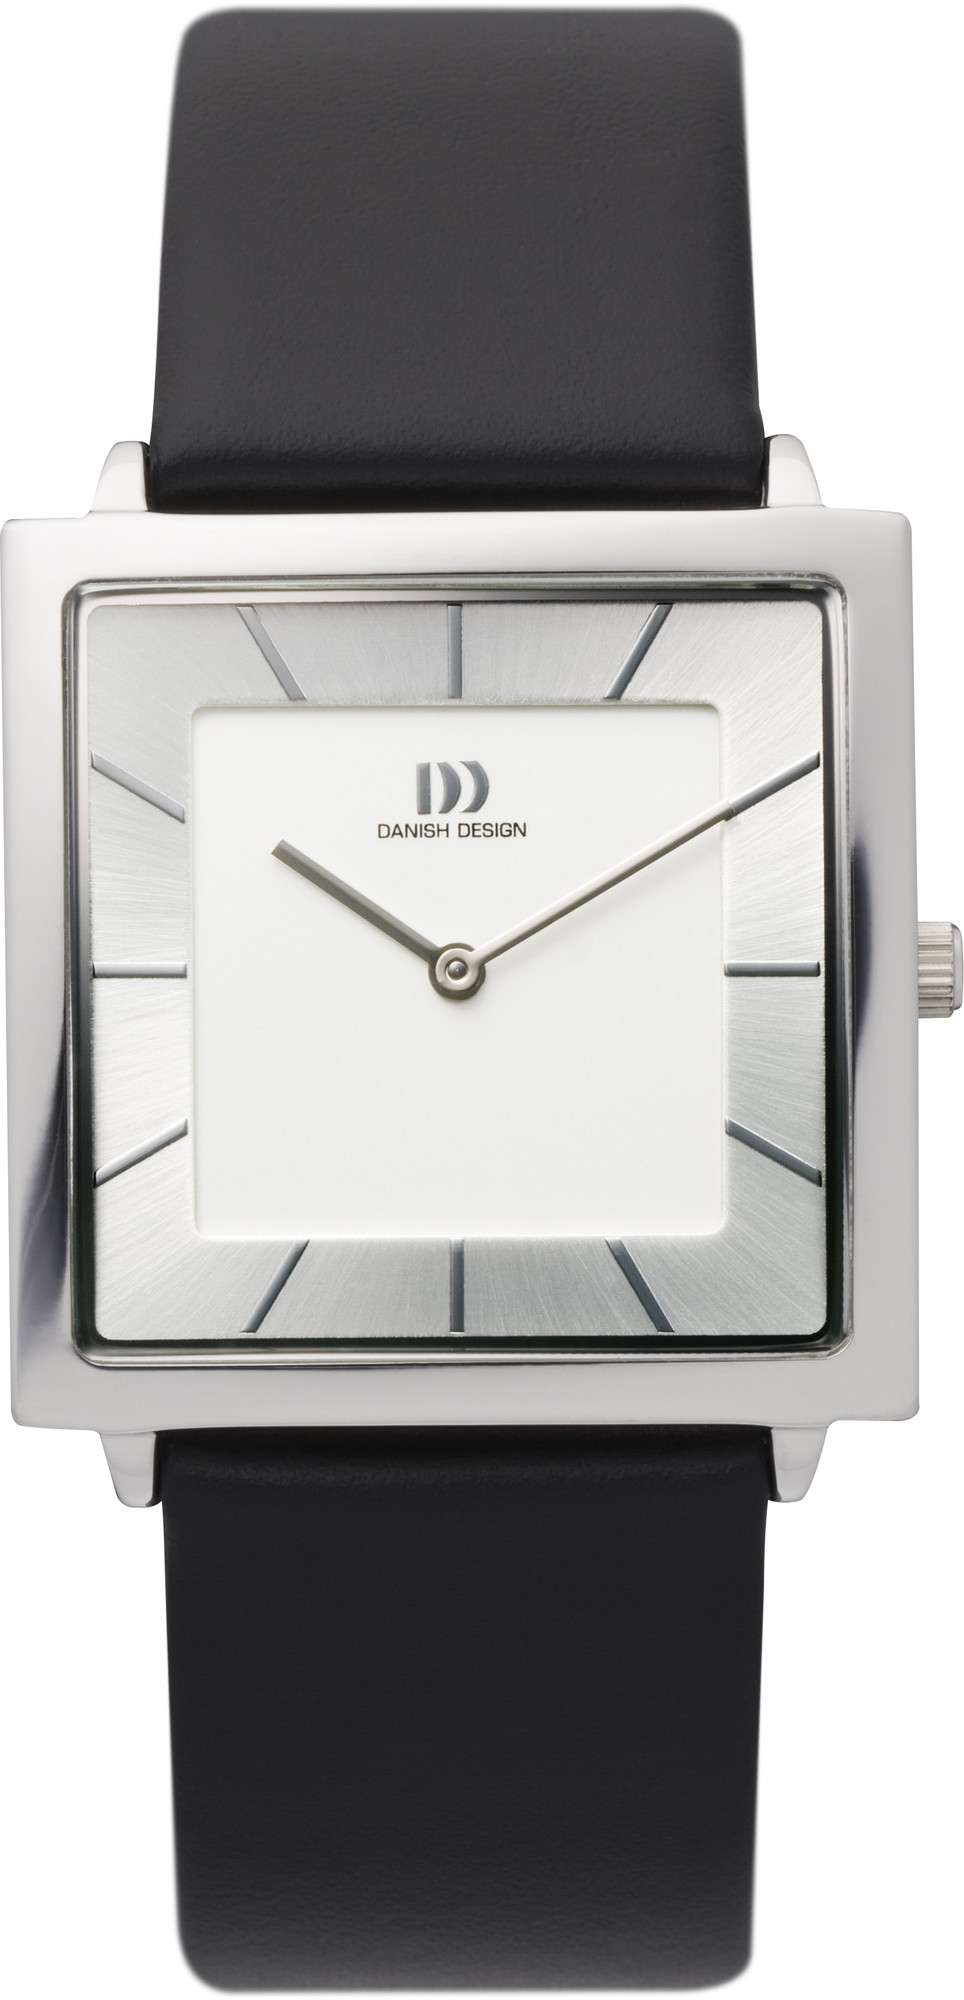 Danish Design Horloge 33 mm Stainless Steel IQ12Q878 1